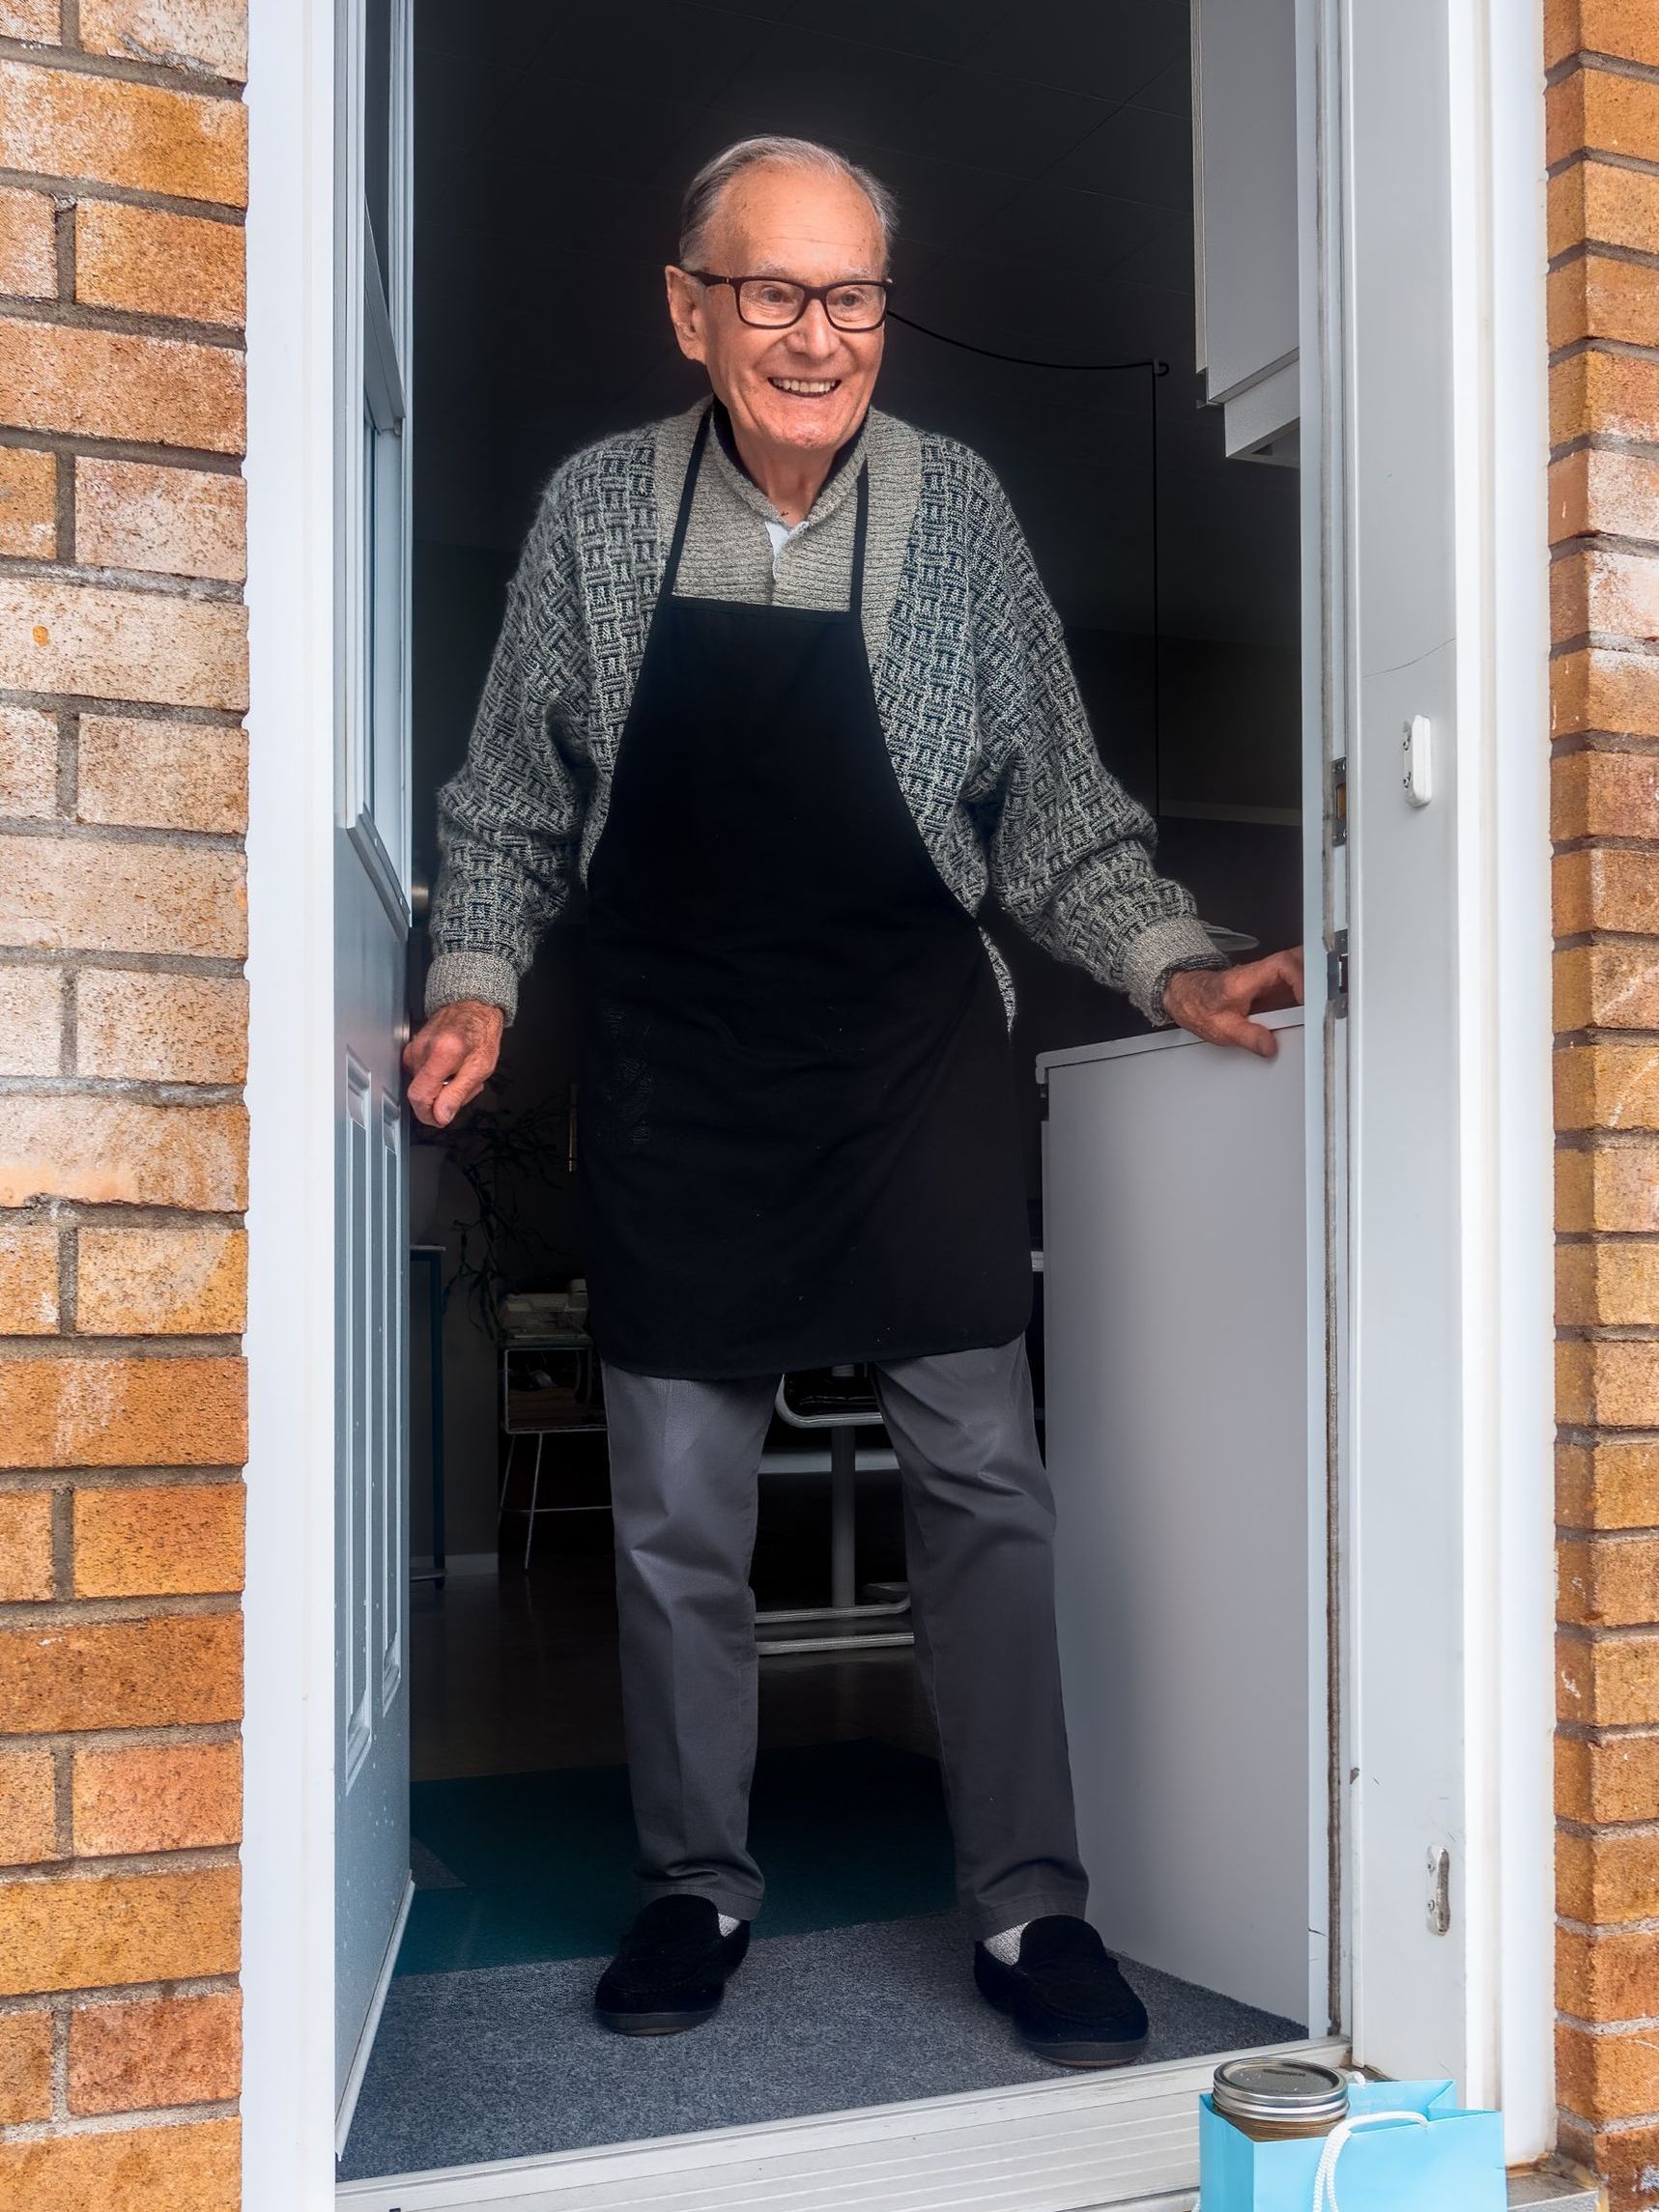 an elderly man in an apron is standing in a doorway .